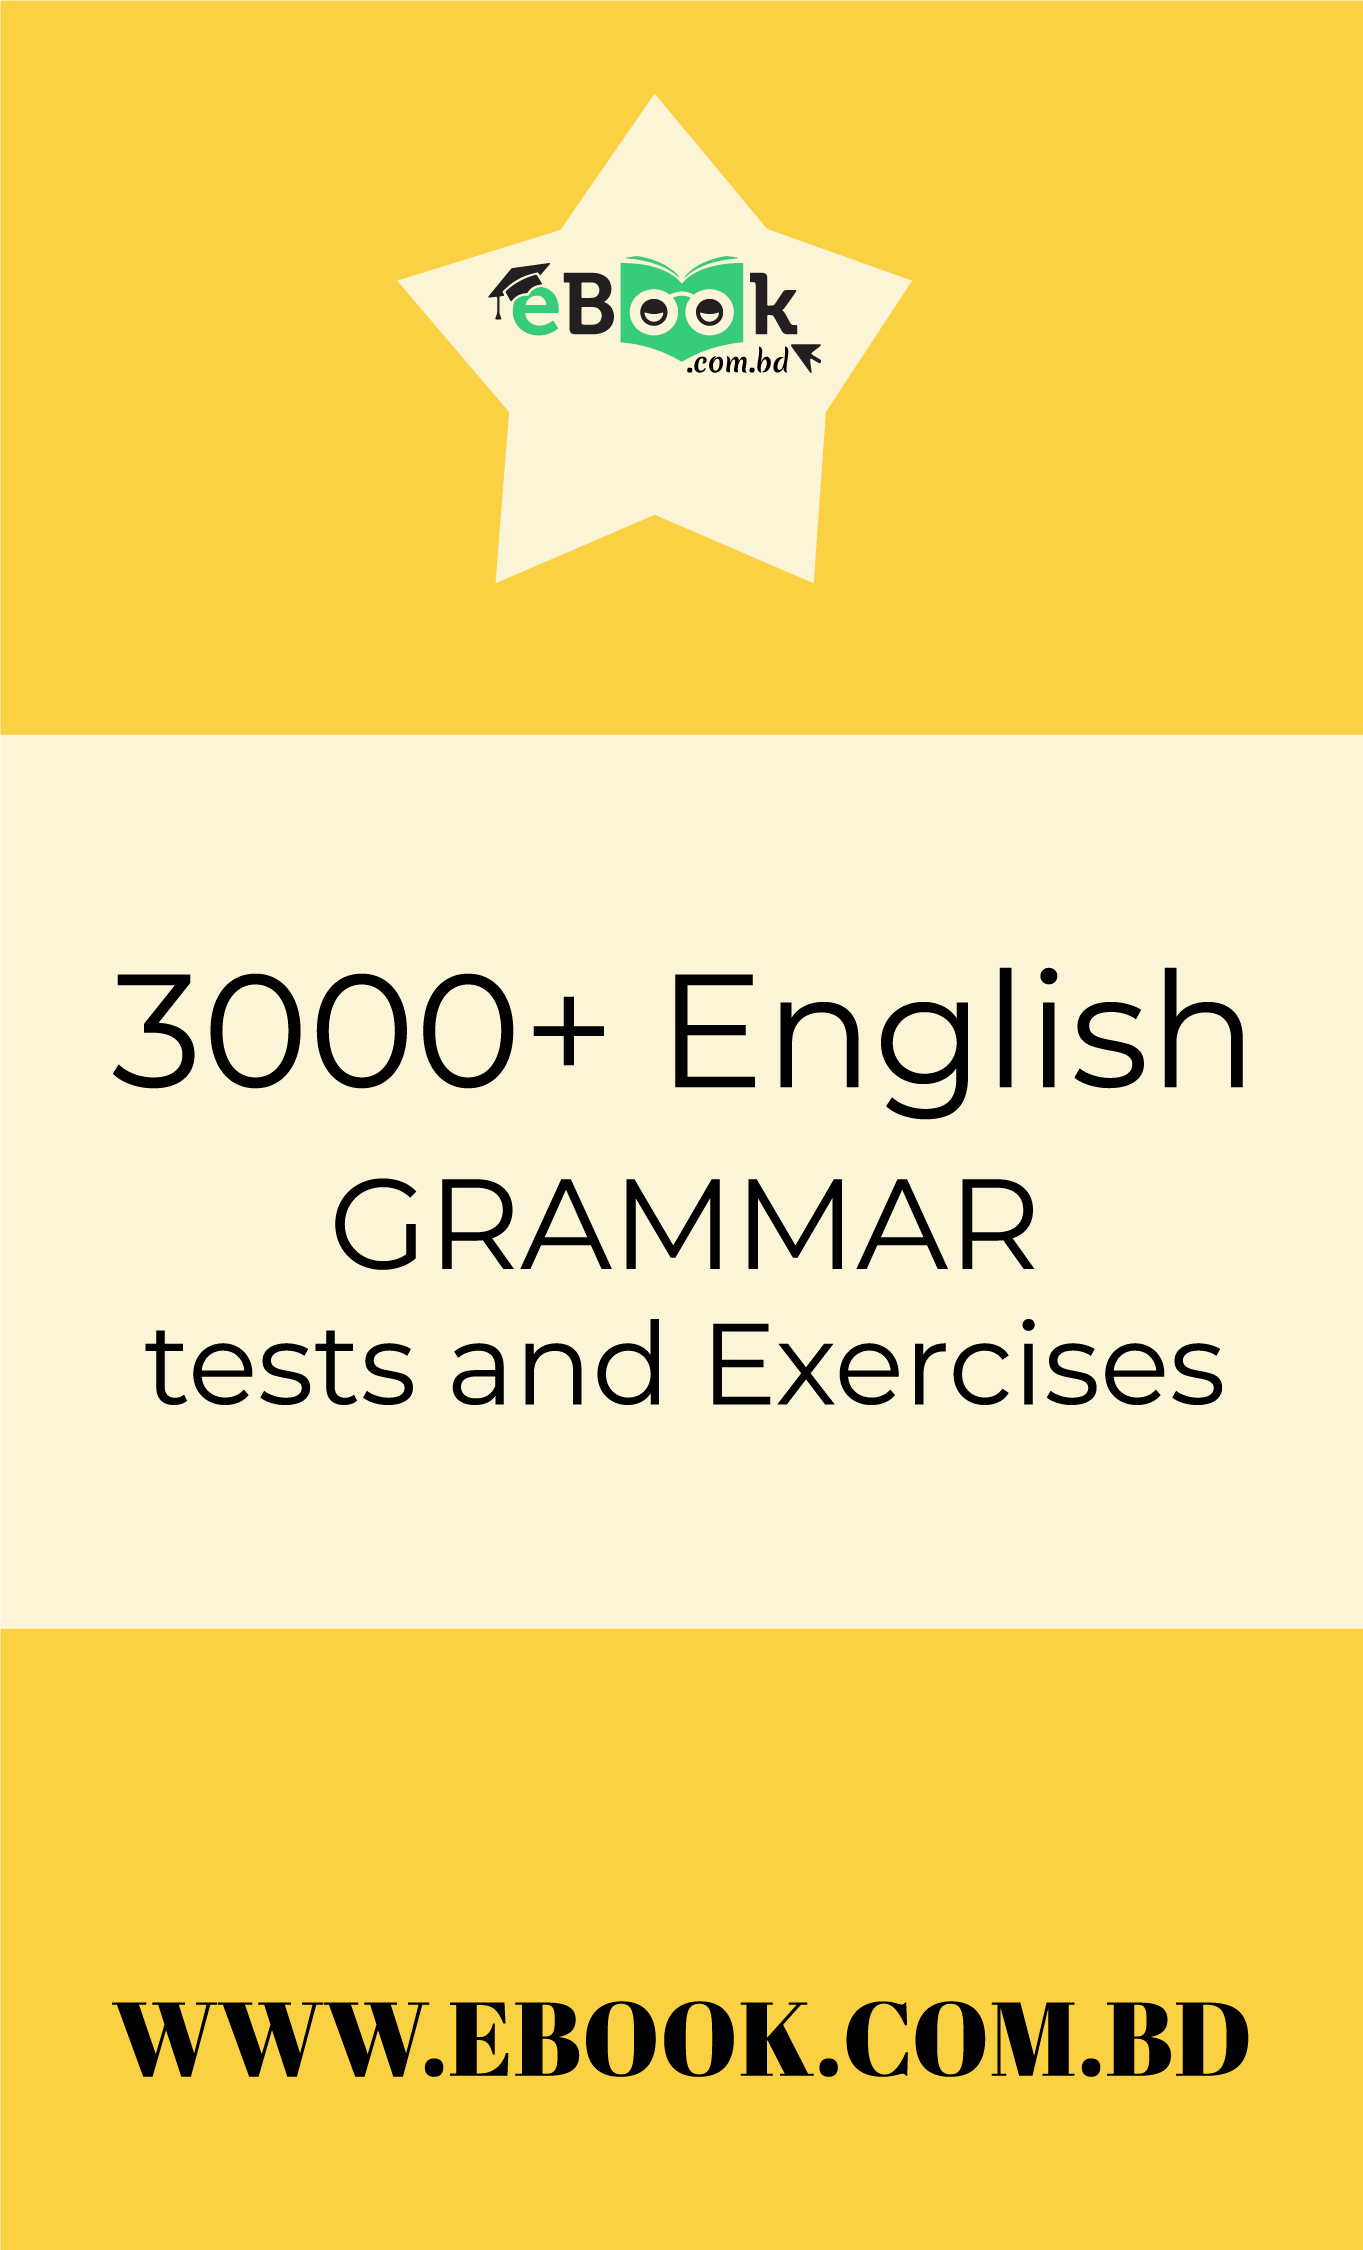 Thumbnail of 3000+ English Grammar tests and Exercises